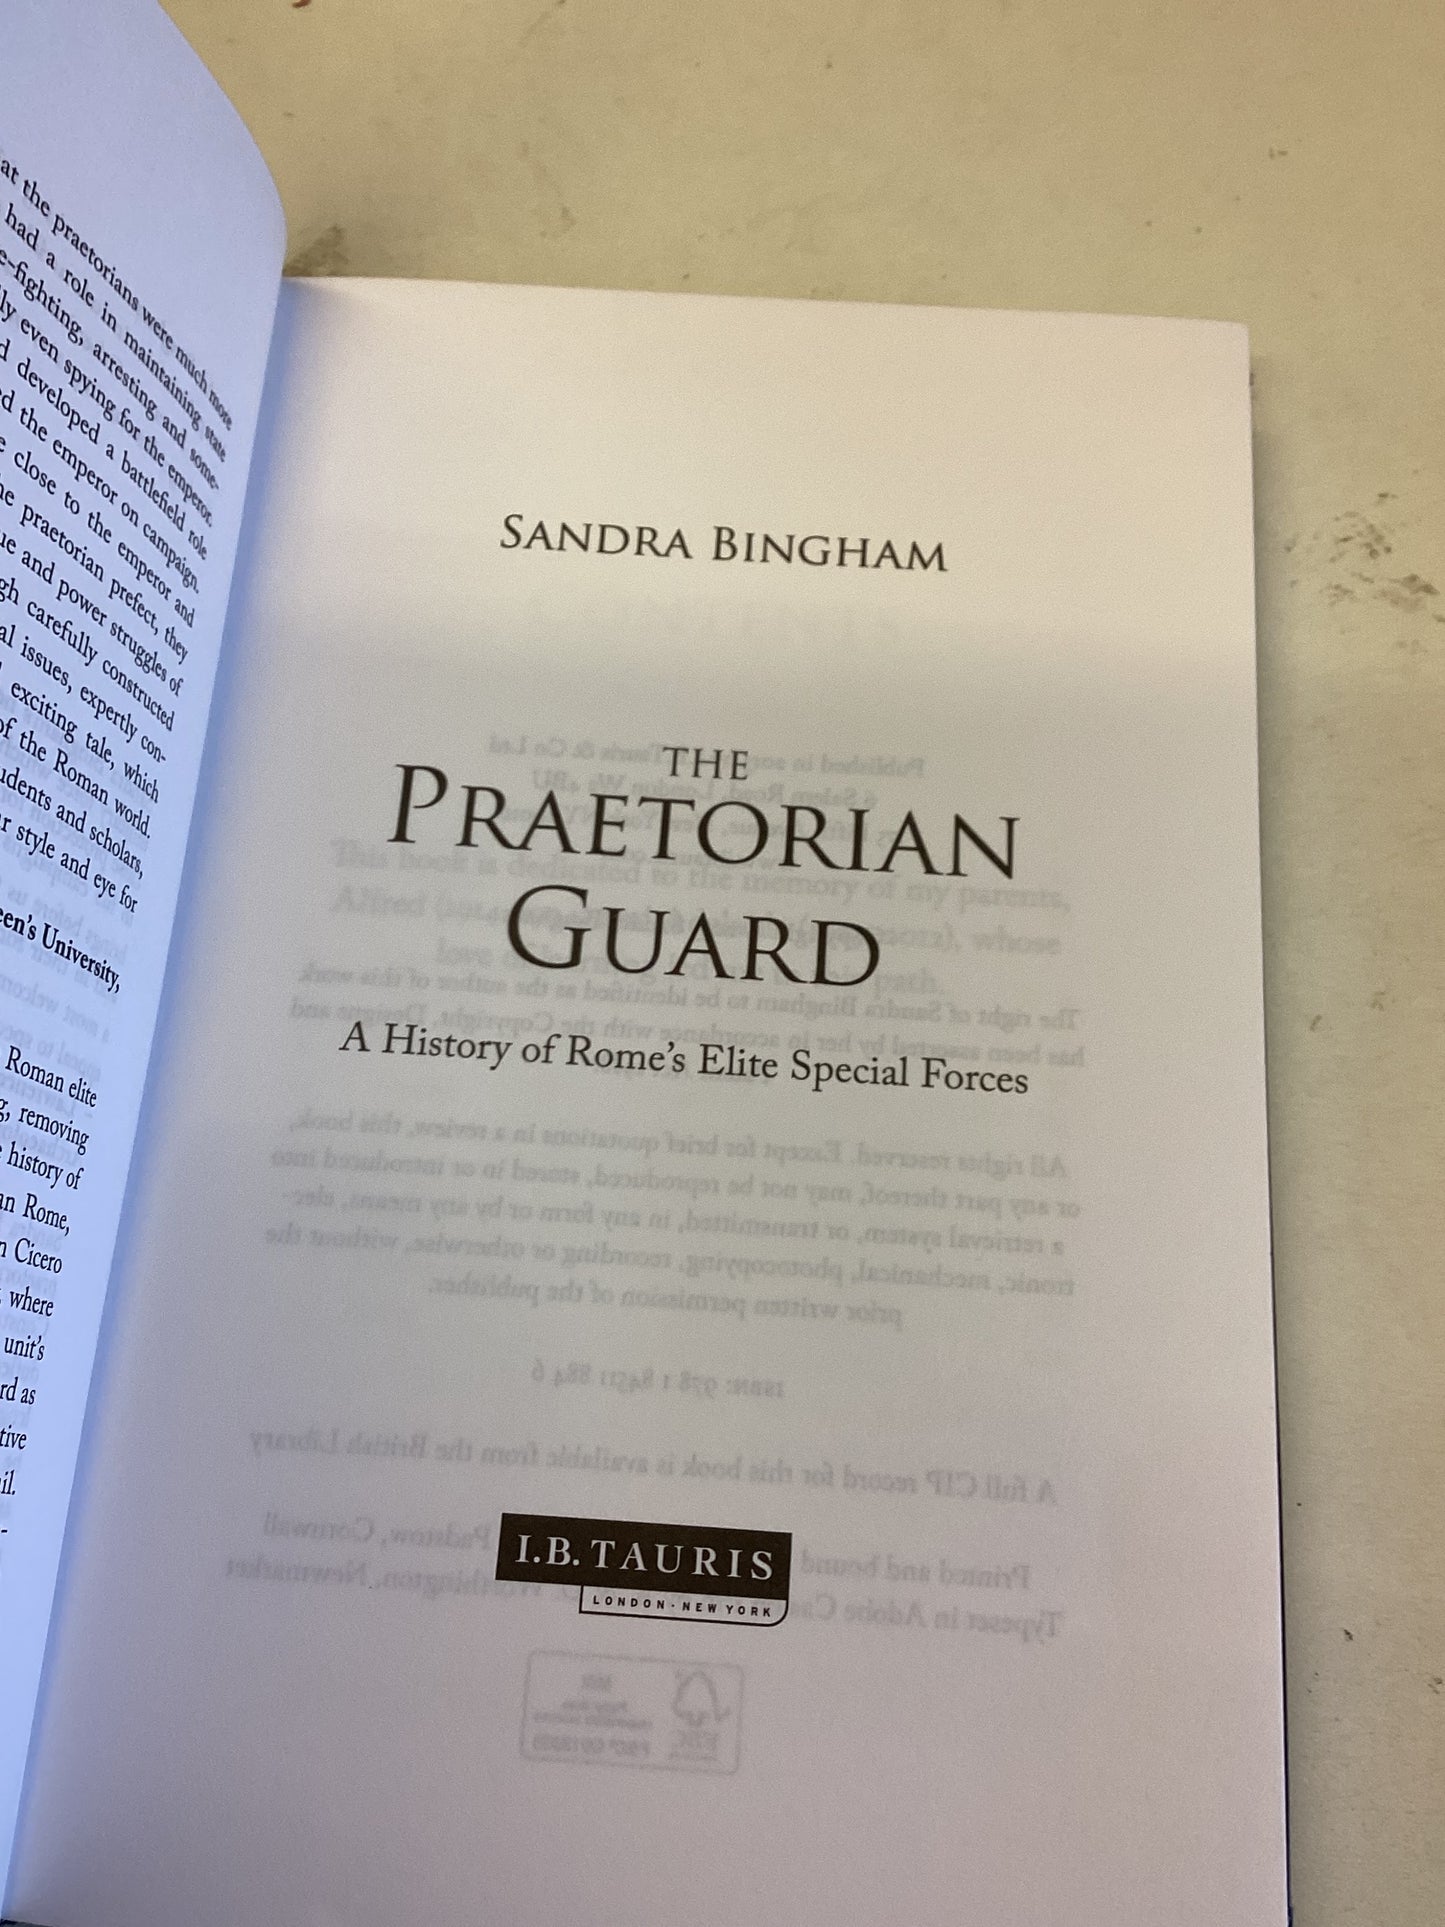 The Praetorian Guard A History of Rome's Elite Special Forces Sandra Bingham